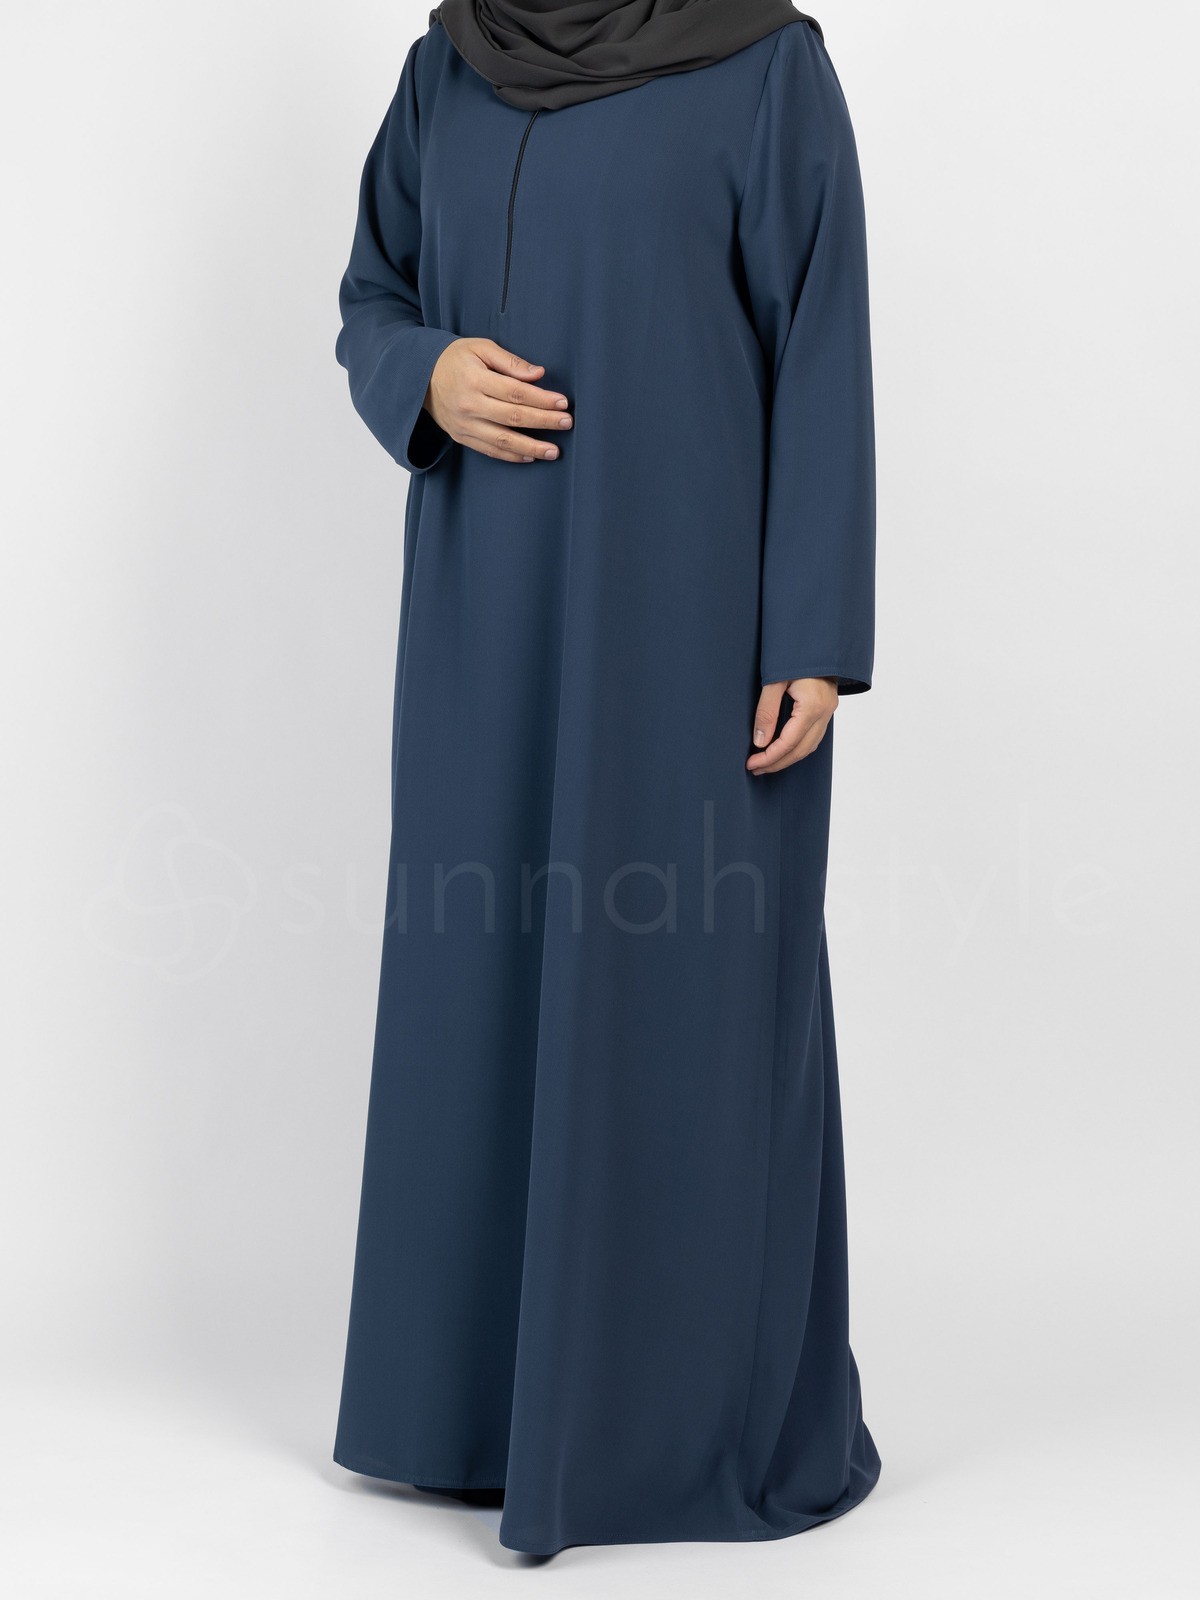 Sunnah Style - Essentials Closed Abaya (Steel Blue)